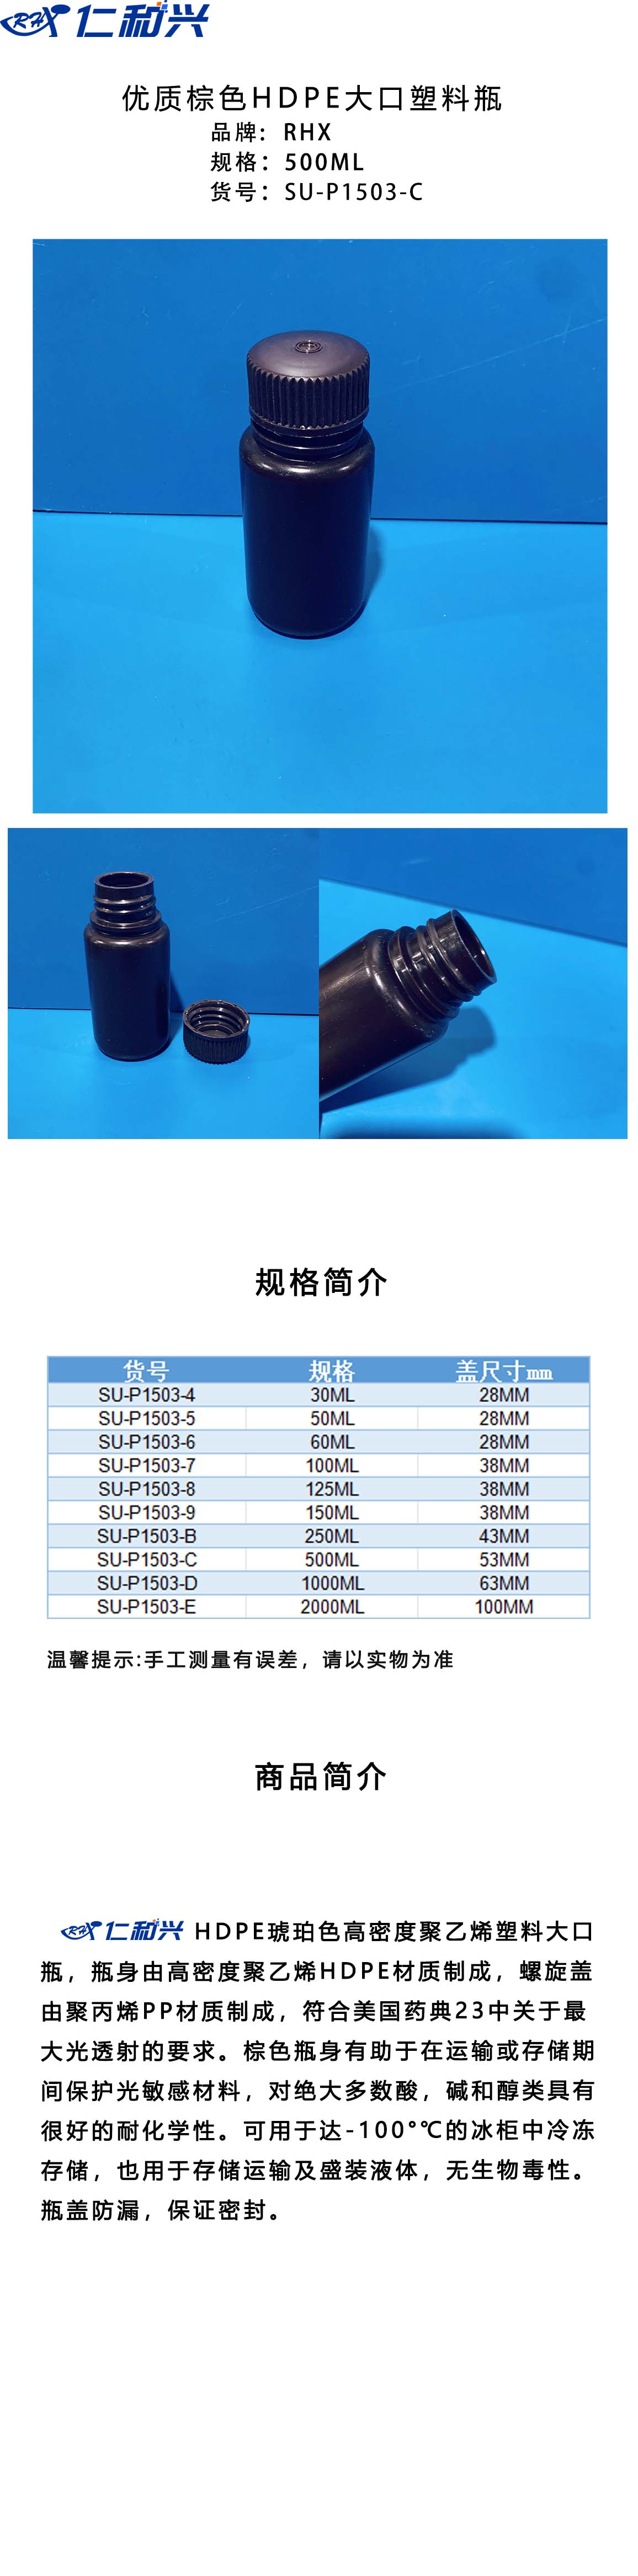 SU-P1503-C 棕色HDPE 大口塑料瓶 长图模板.jpg